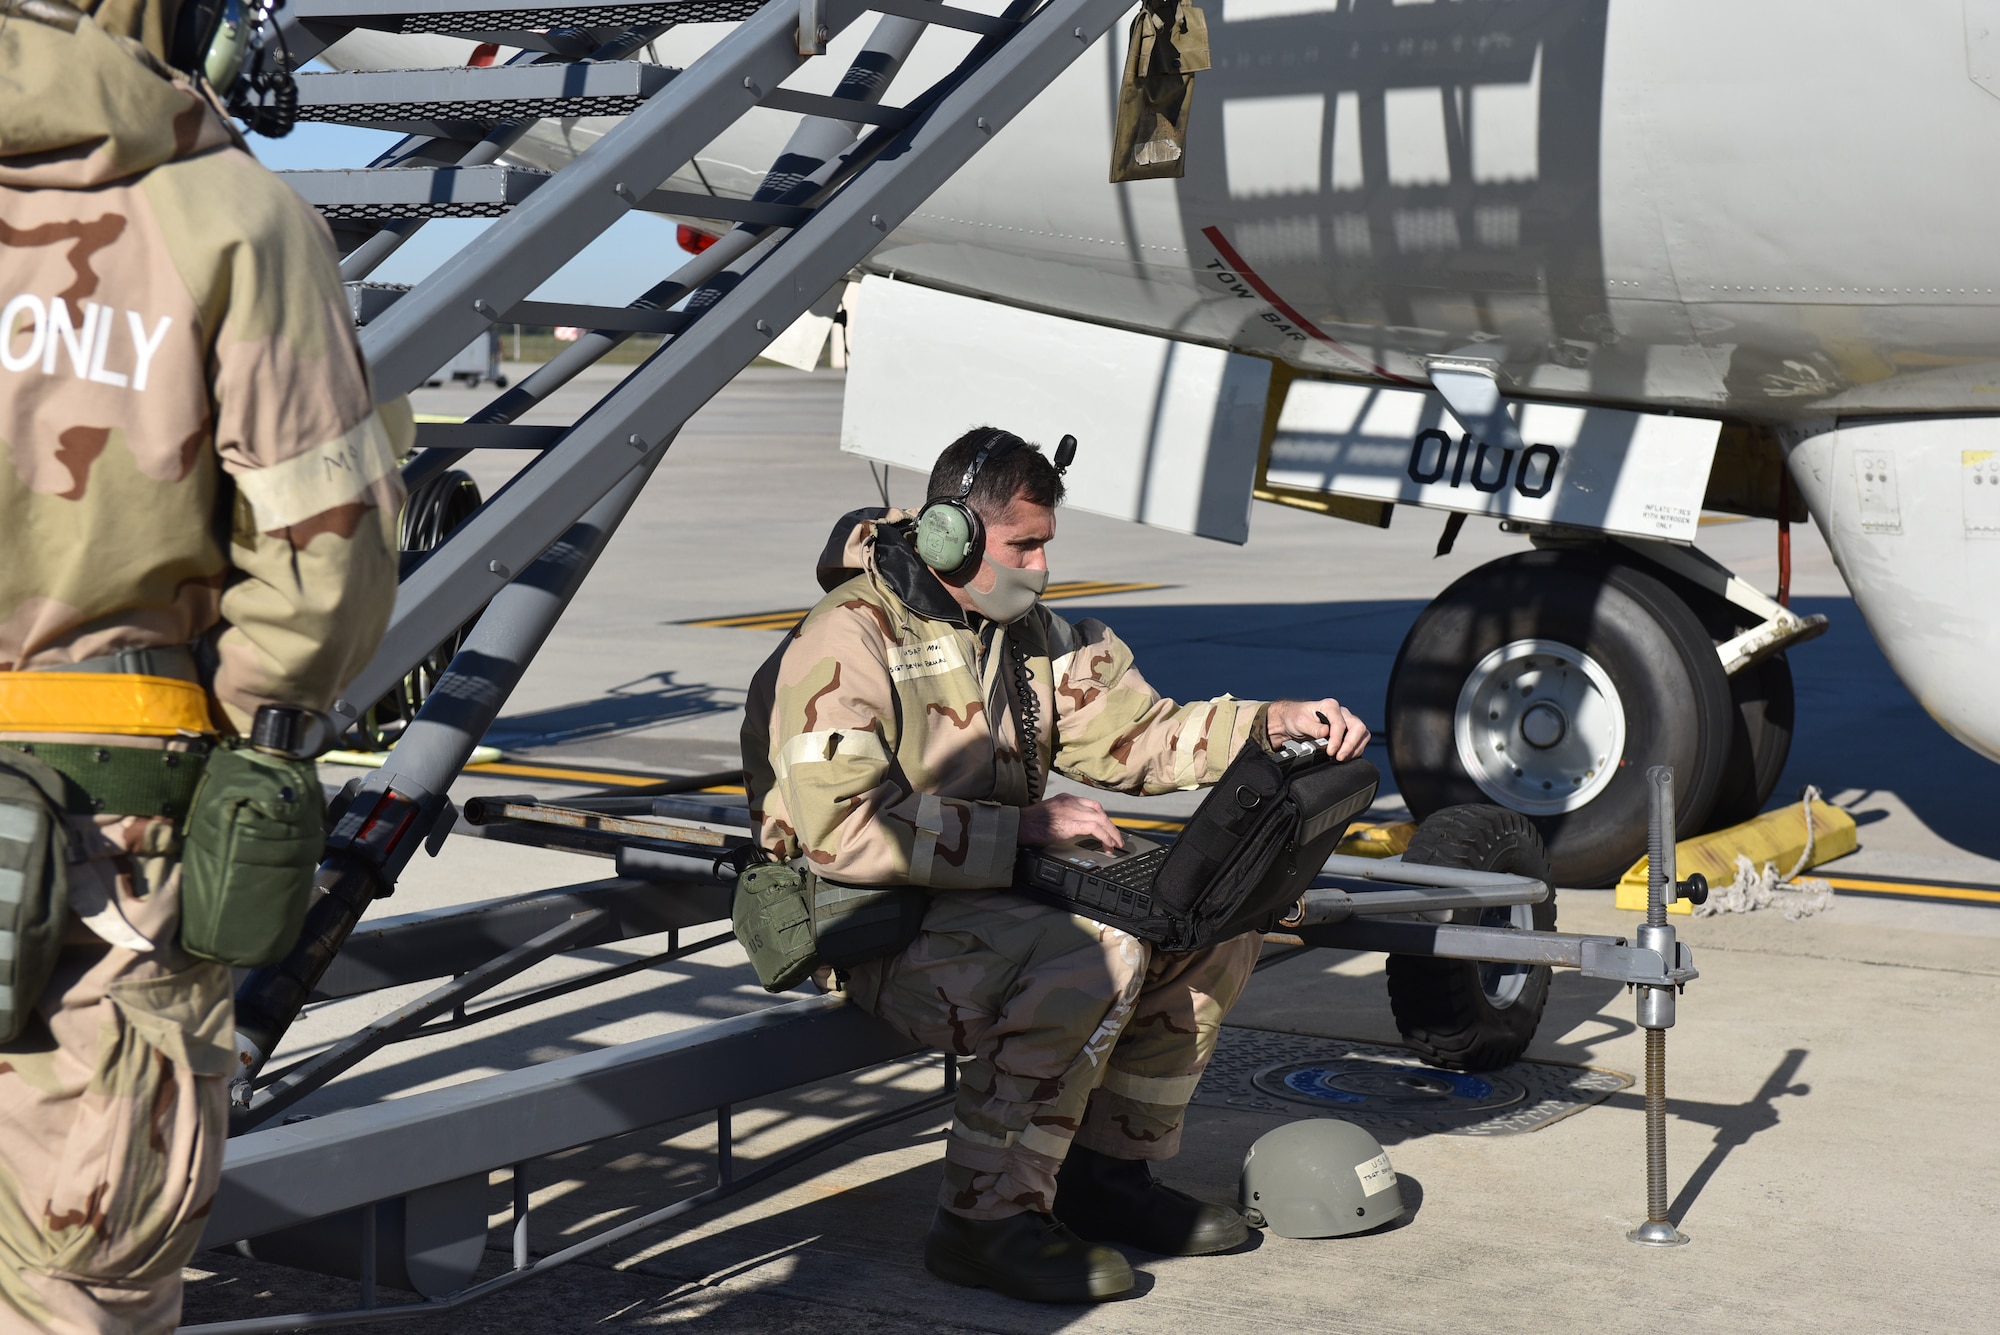 Photo shows an Airman sitting next to an aircraft on a laptop.